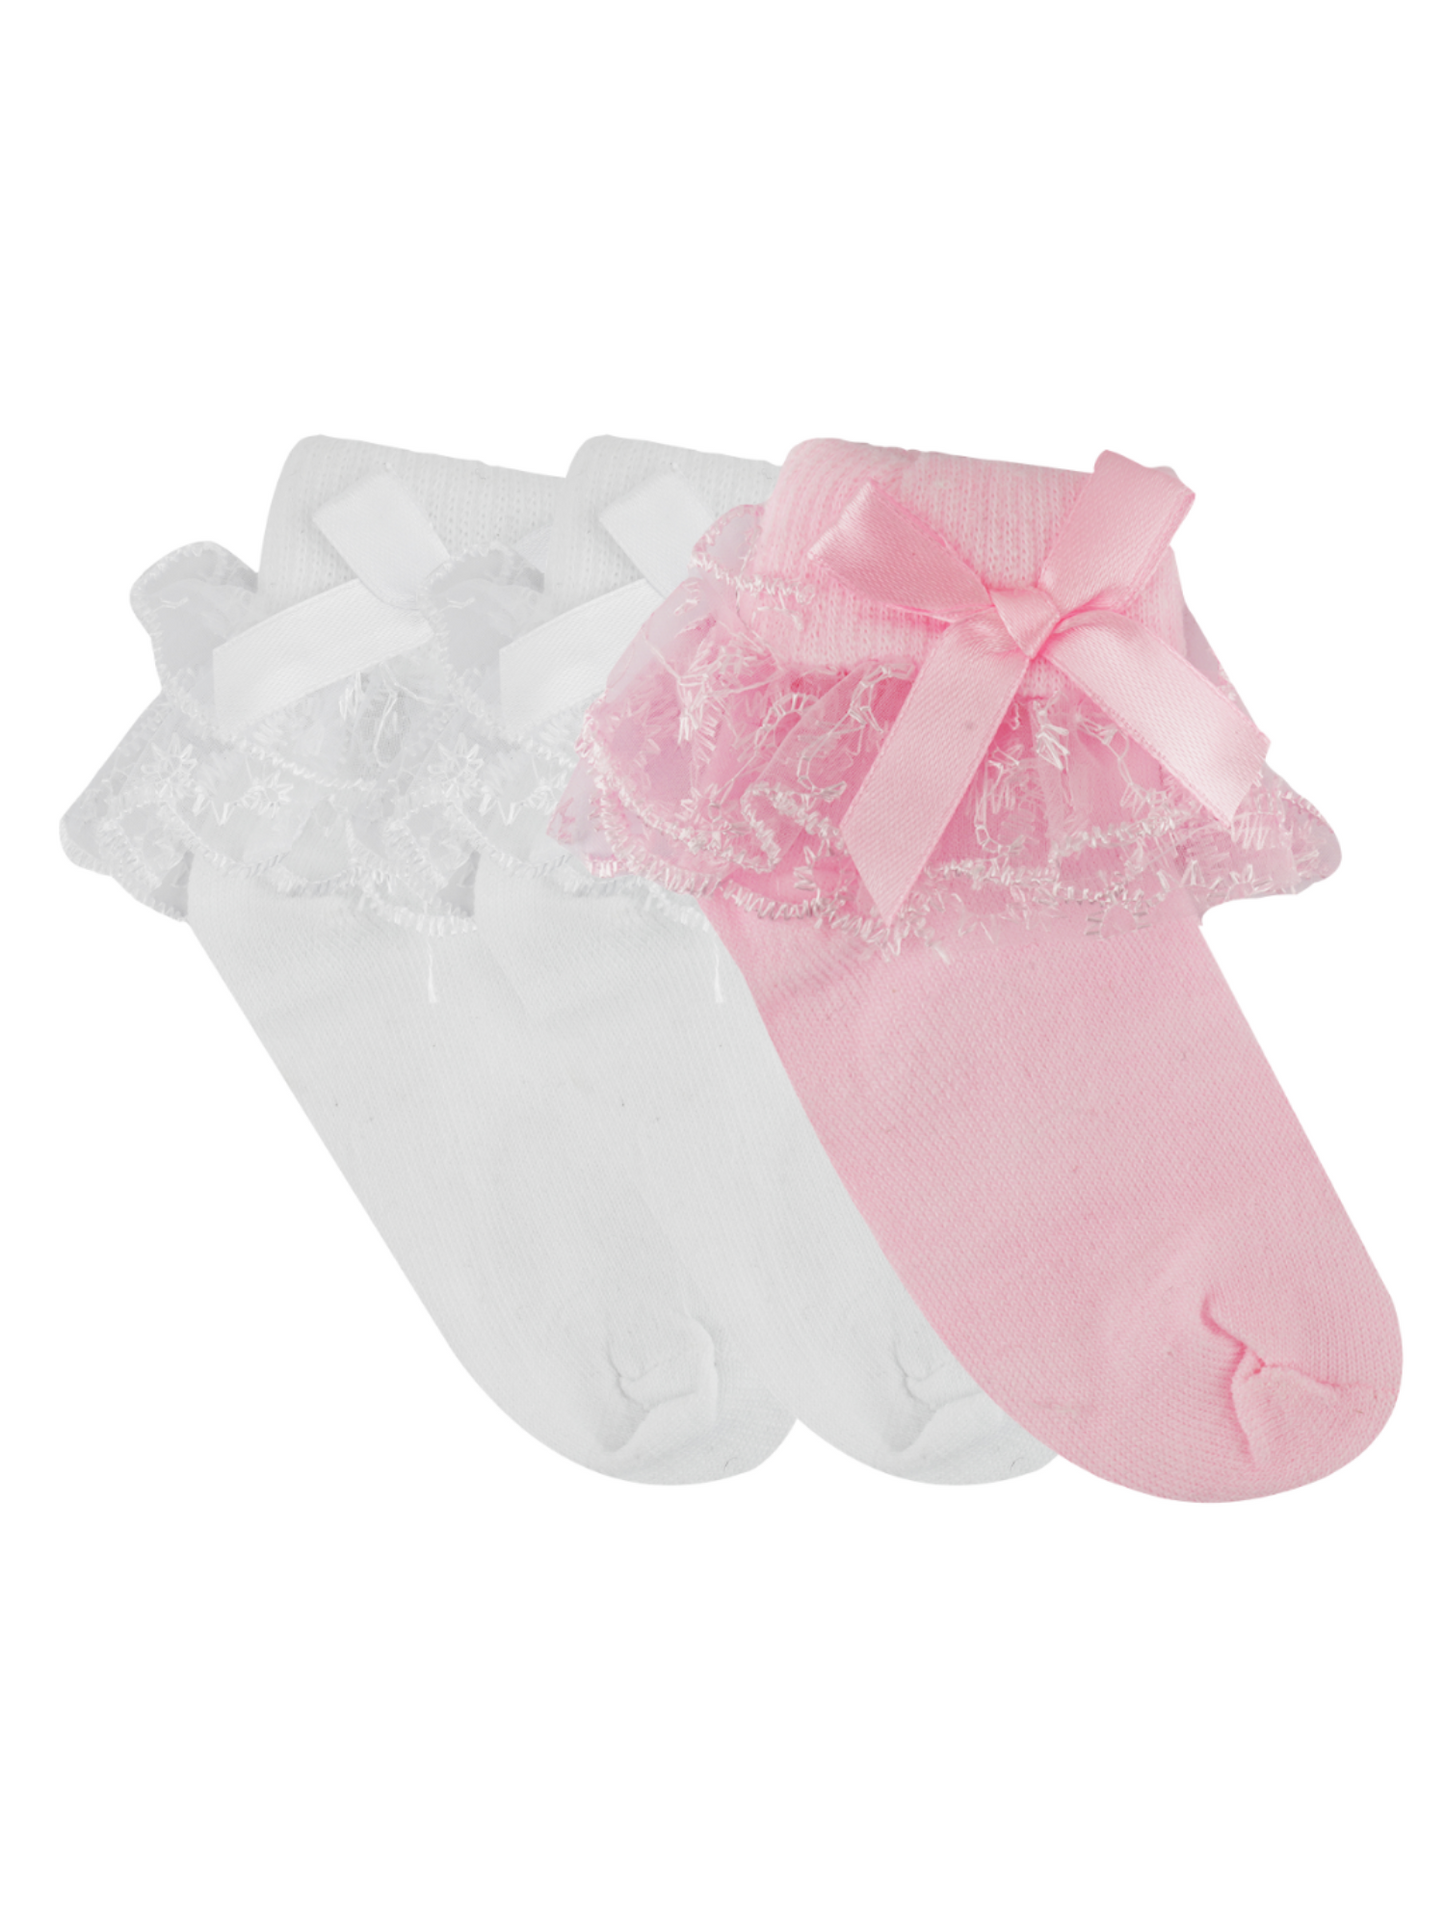 Kids Frill Cotton Socks for Children - Pack of 3 (Assorted)